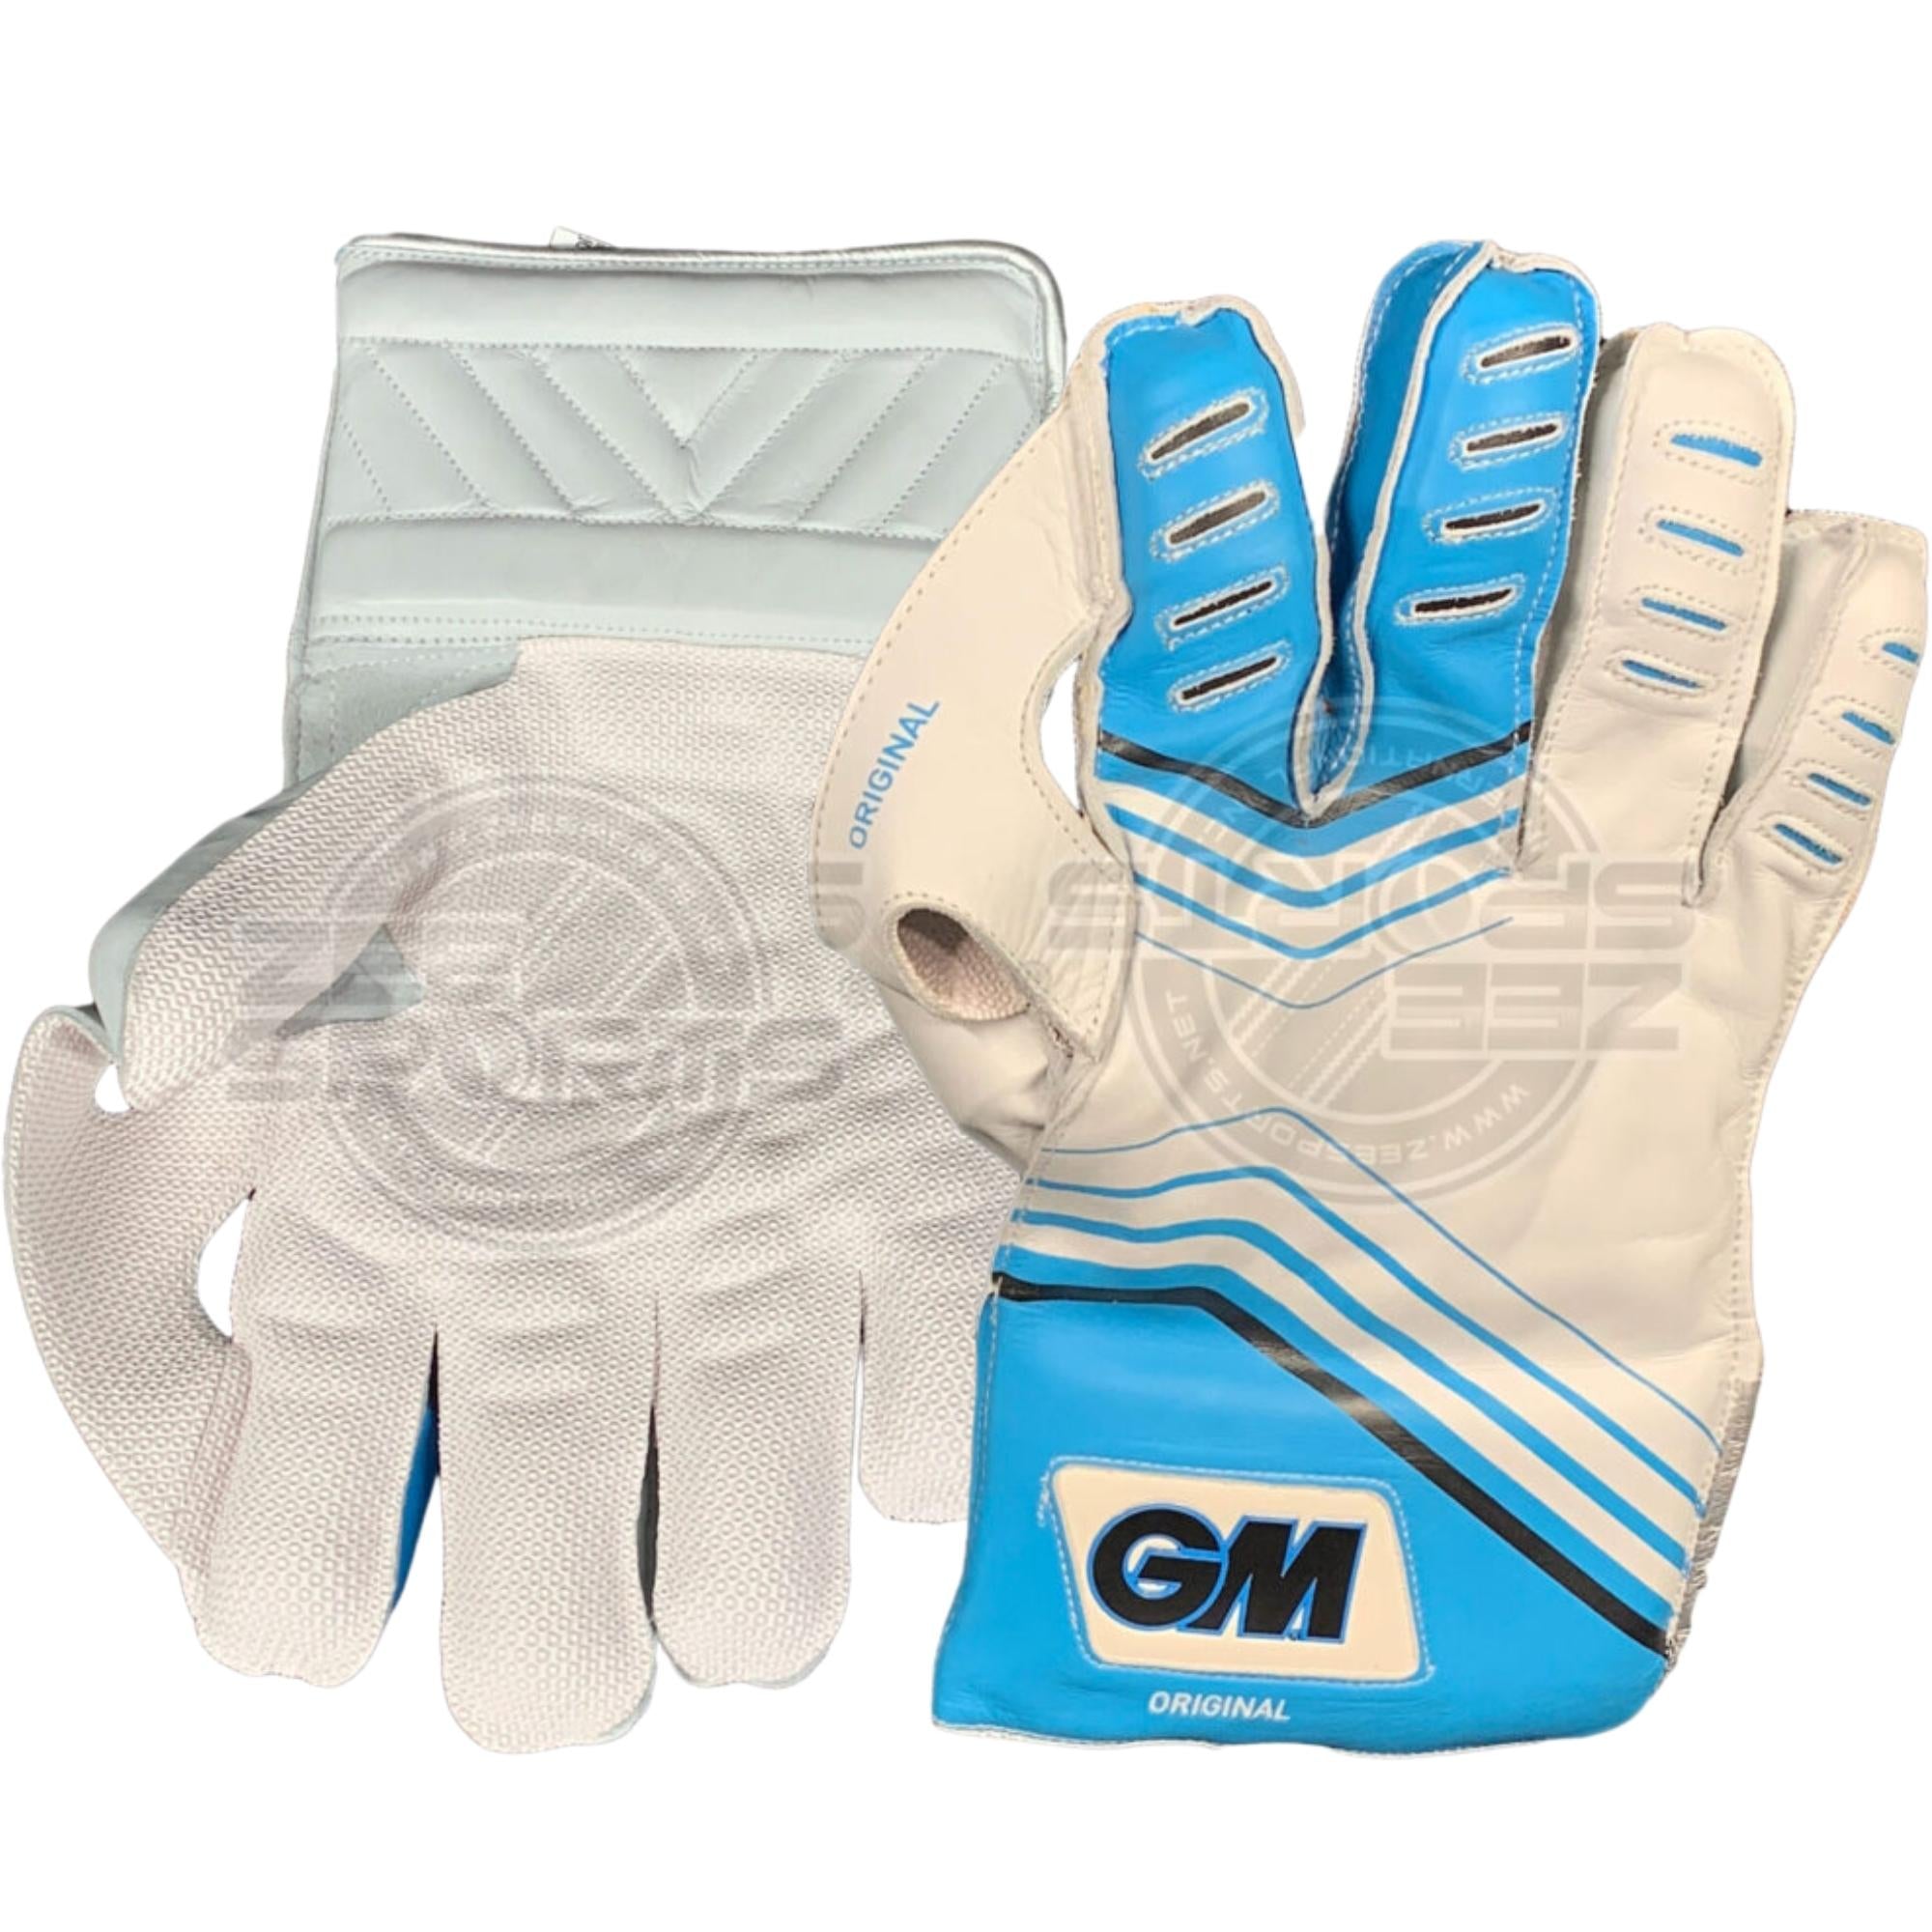 GM Original Wicketkeeping Gloves